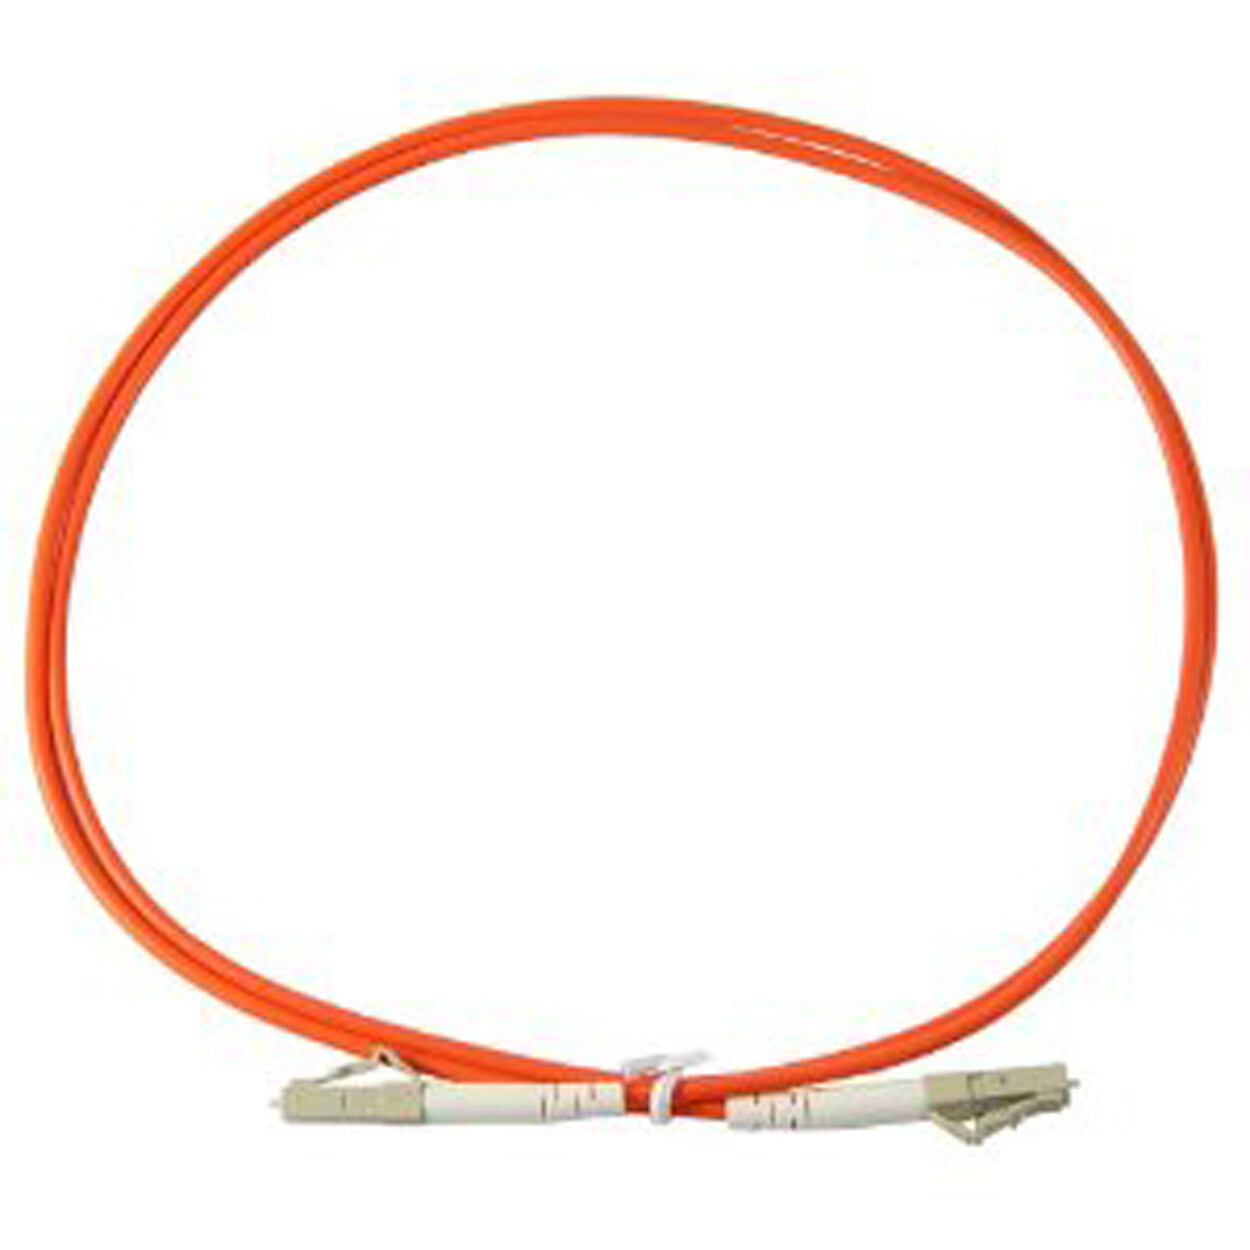 Cable, F/O, Multimode, LC to LC, 1 Meter, 50um/125um core